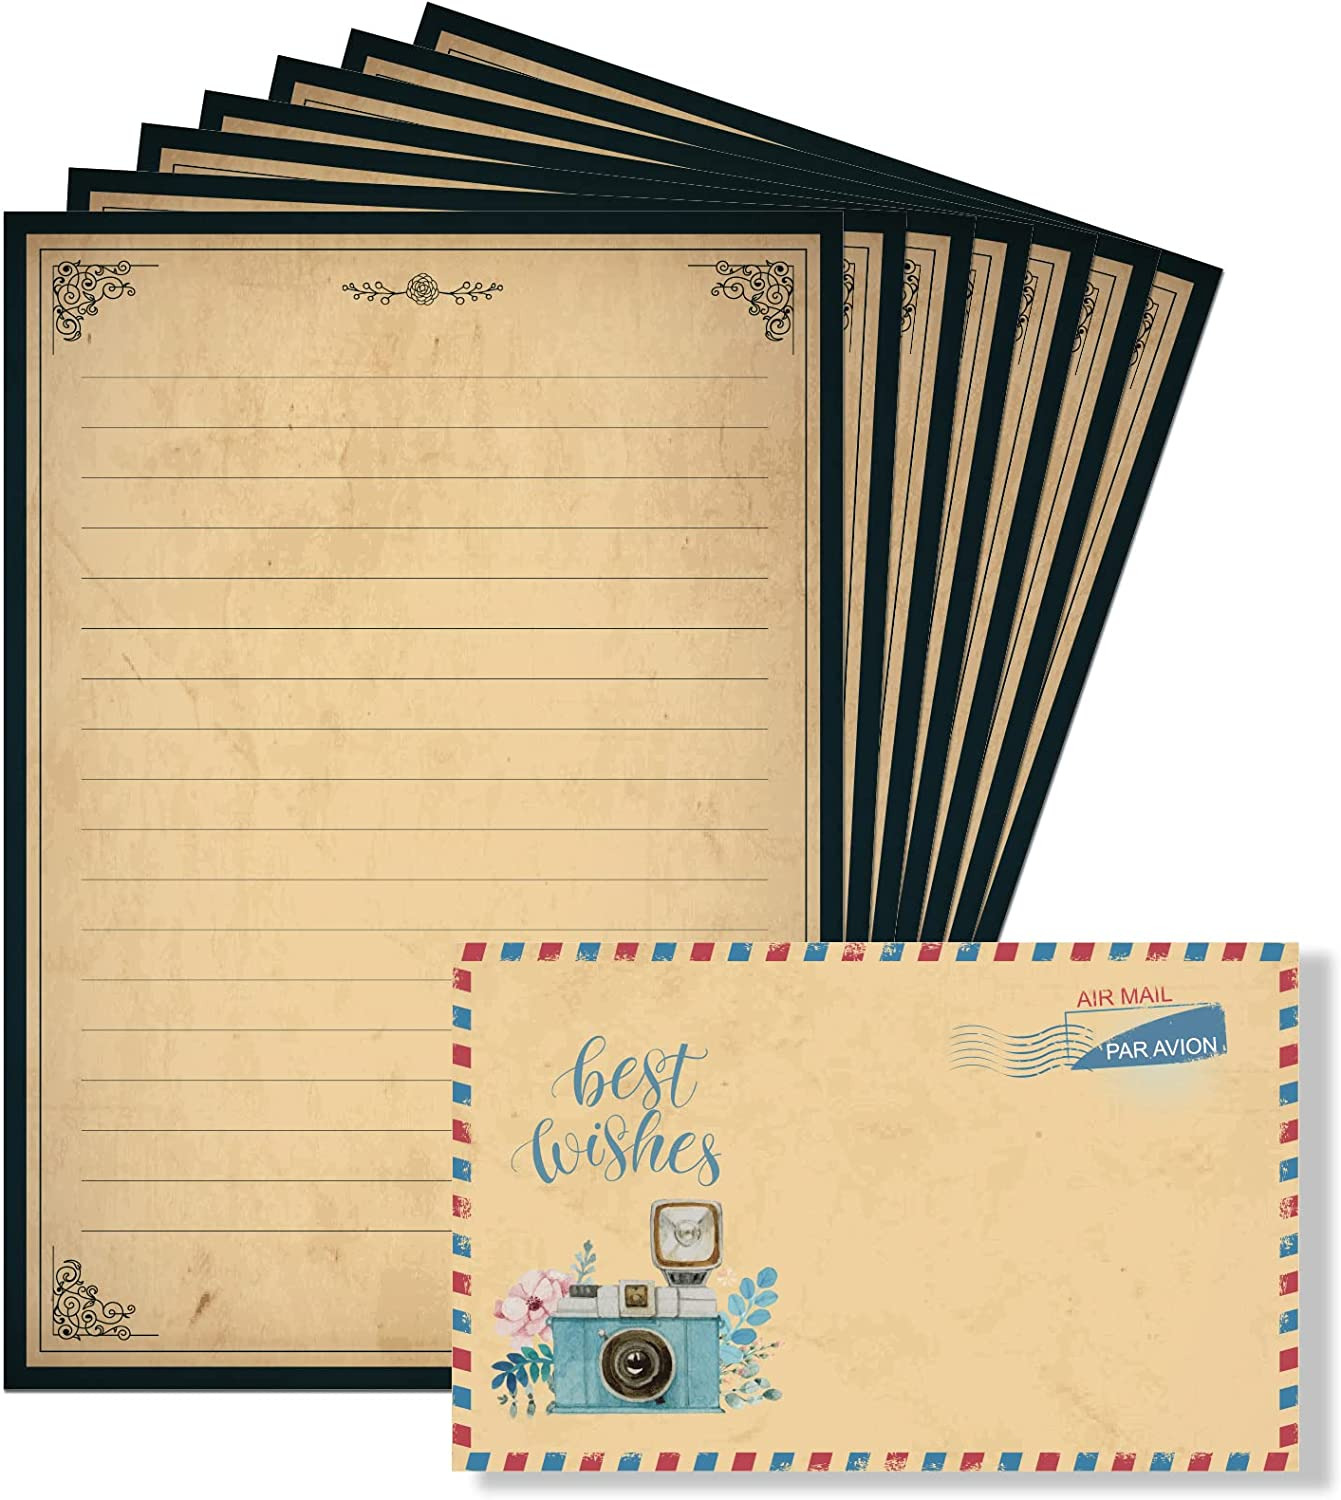 Lined Vintage Stationary Paper, Old Fashion Stationary Paper and Envelopes Set, 